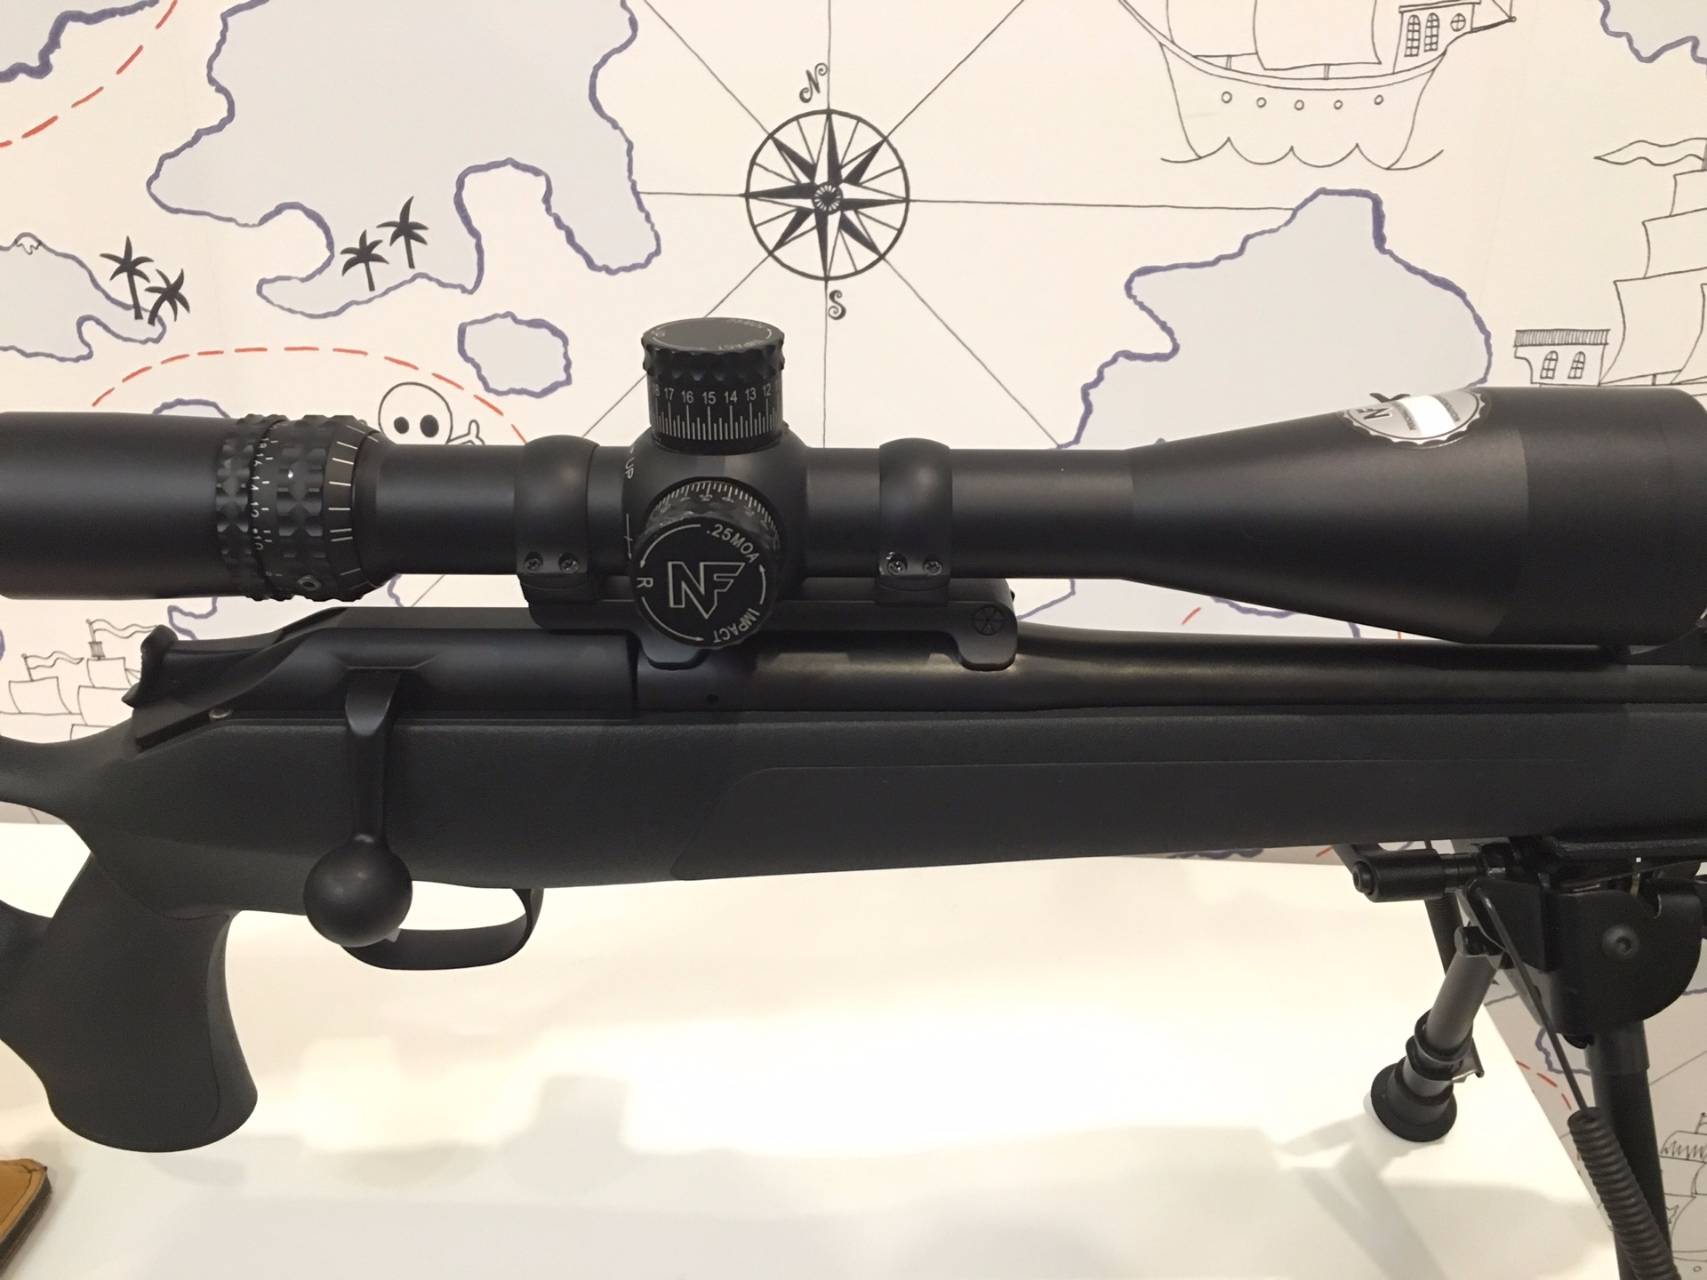 Снайперская винтовка blaser r 93 lrs / r 93 lrs 2 / r 93 tactical / r 93 tactical 2 (германия) - описание, характеристики и фото